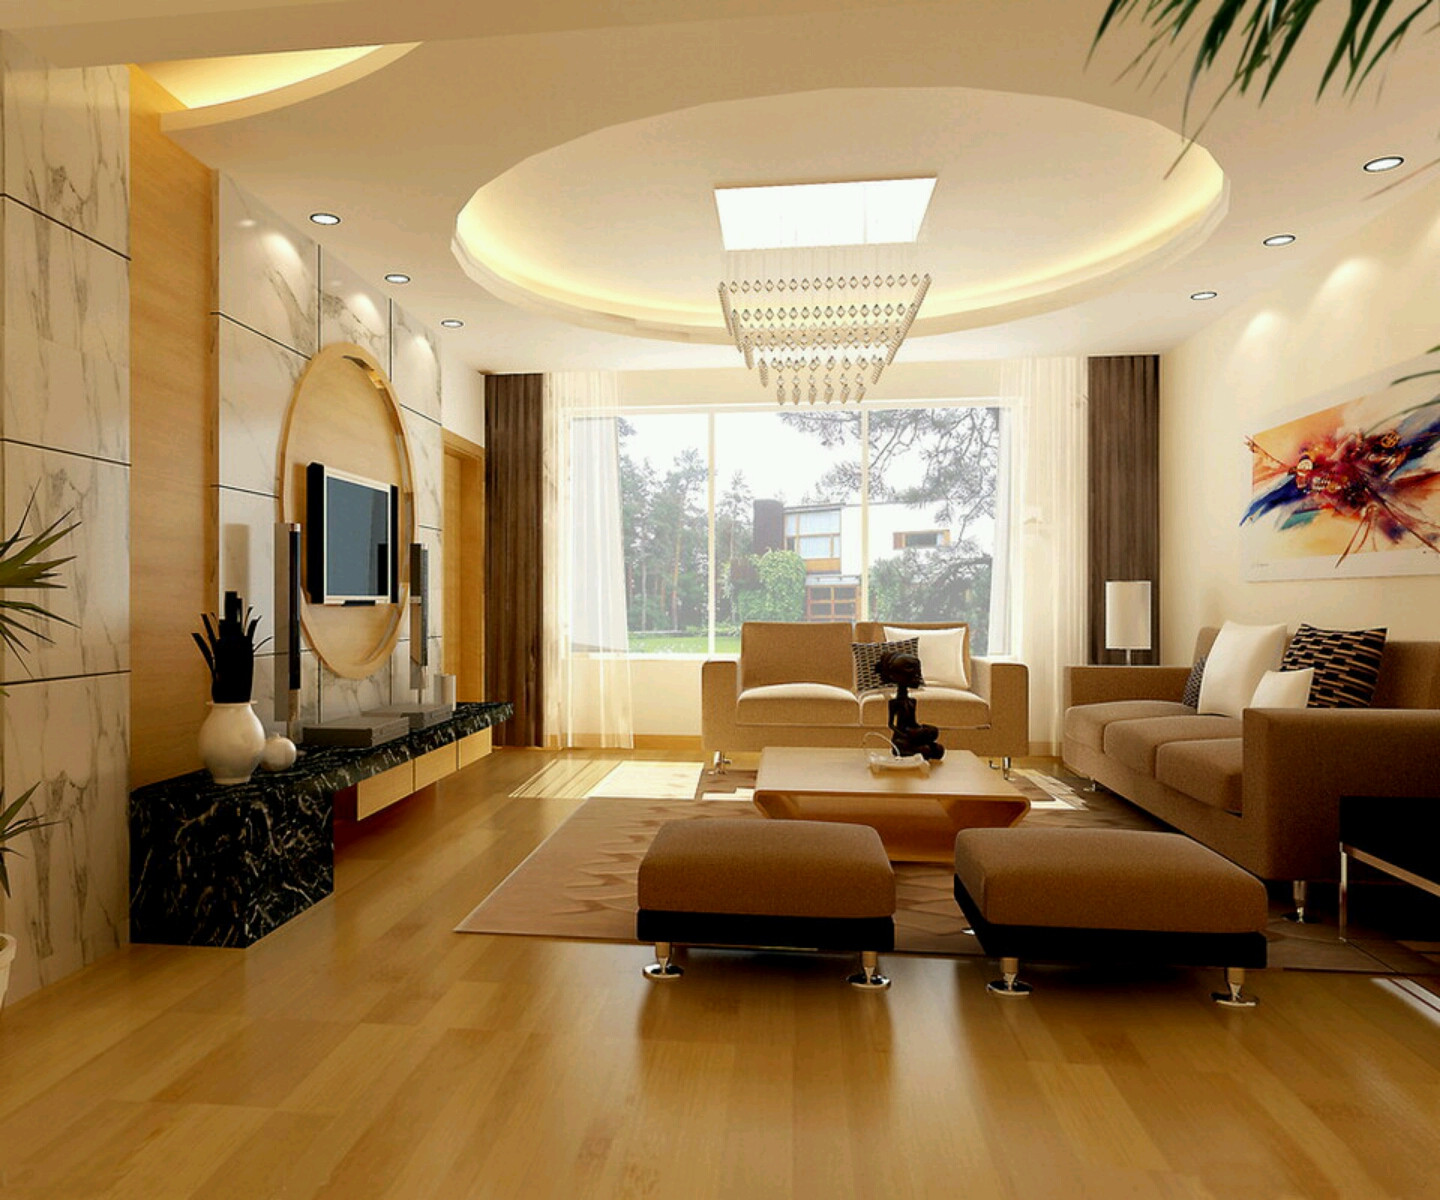 Living Room Interior Ideas
 16 Simple Interior Design Ideas for Living Room